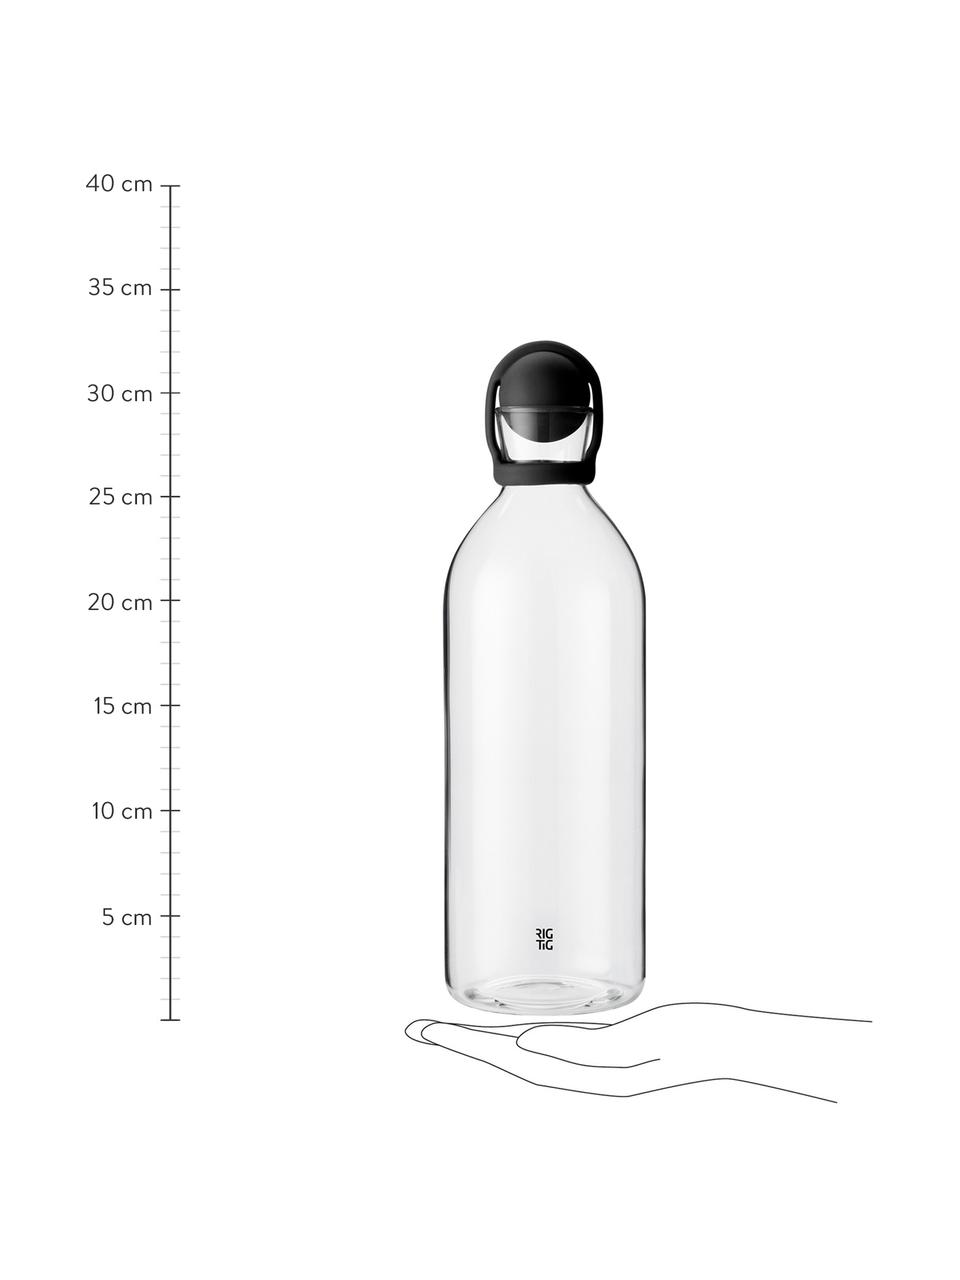 Waterkaraf Cool-It met dop 1,5 L, Zwart, transparant, H 31 cm, 1.5 L